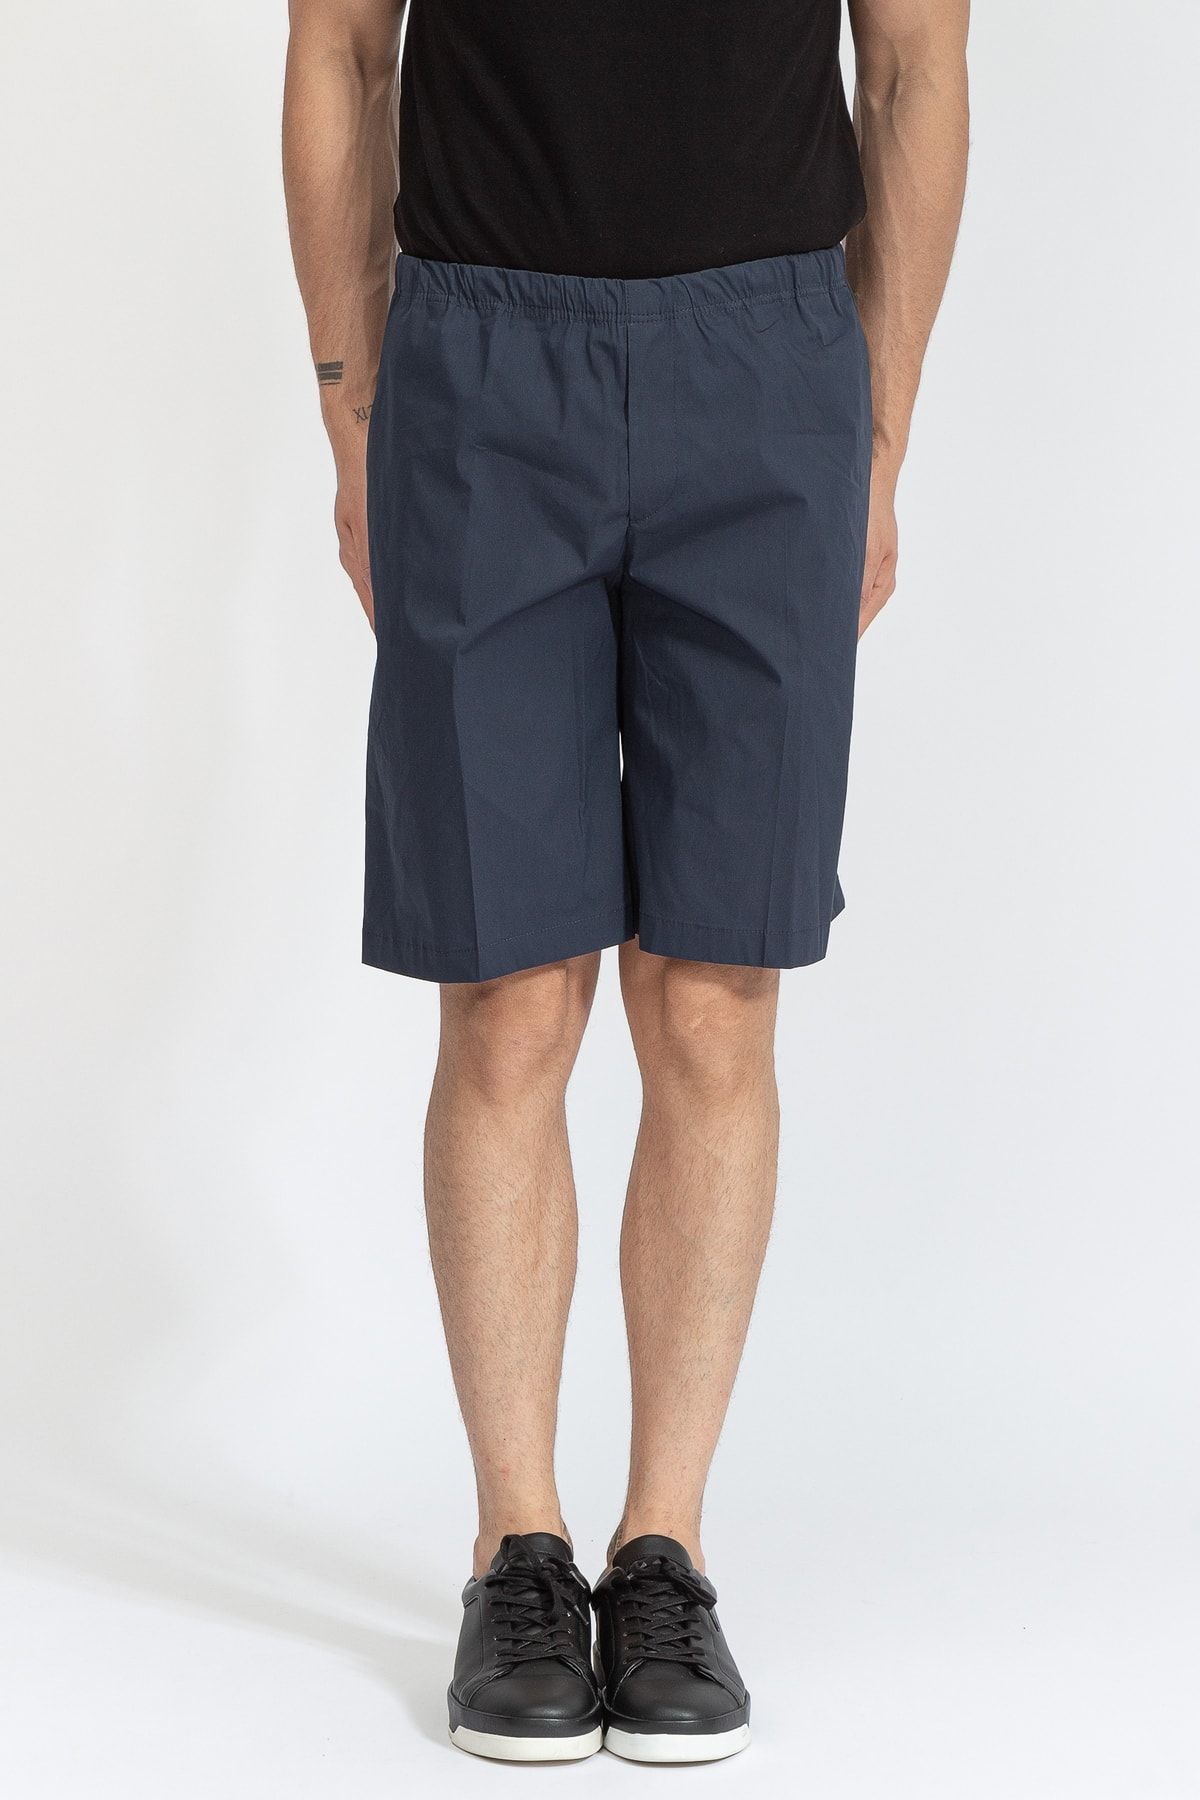 Calvin Klein Paper Cotton Stretch Shorts Erkek Bermuda Şortk10k108954